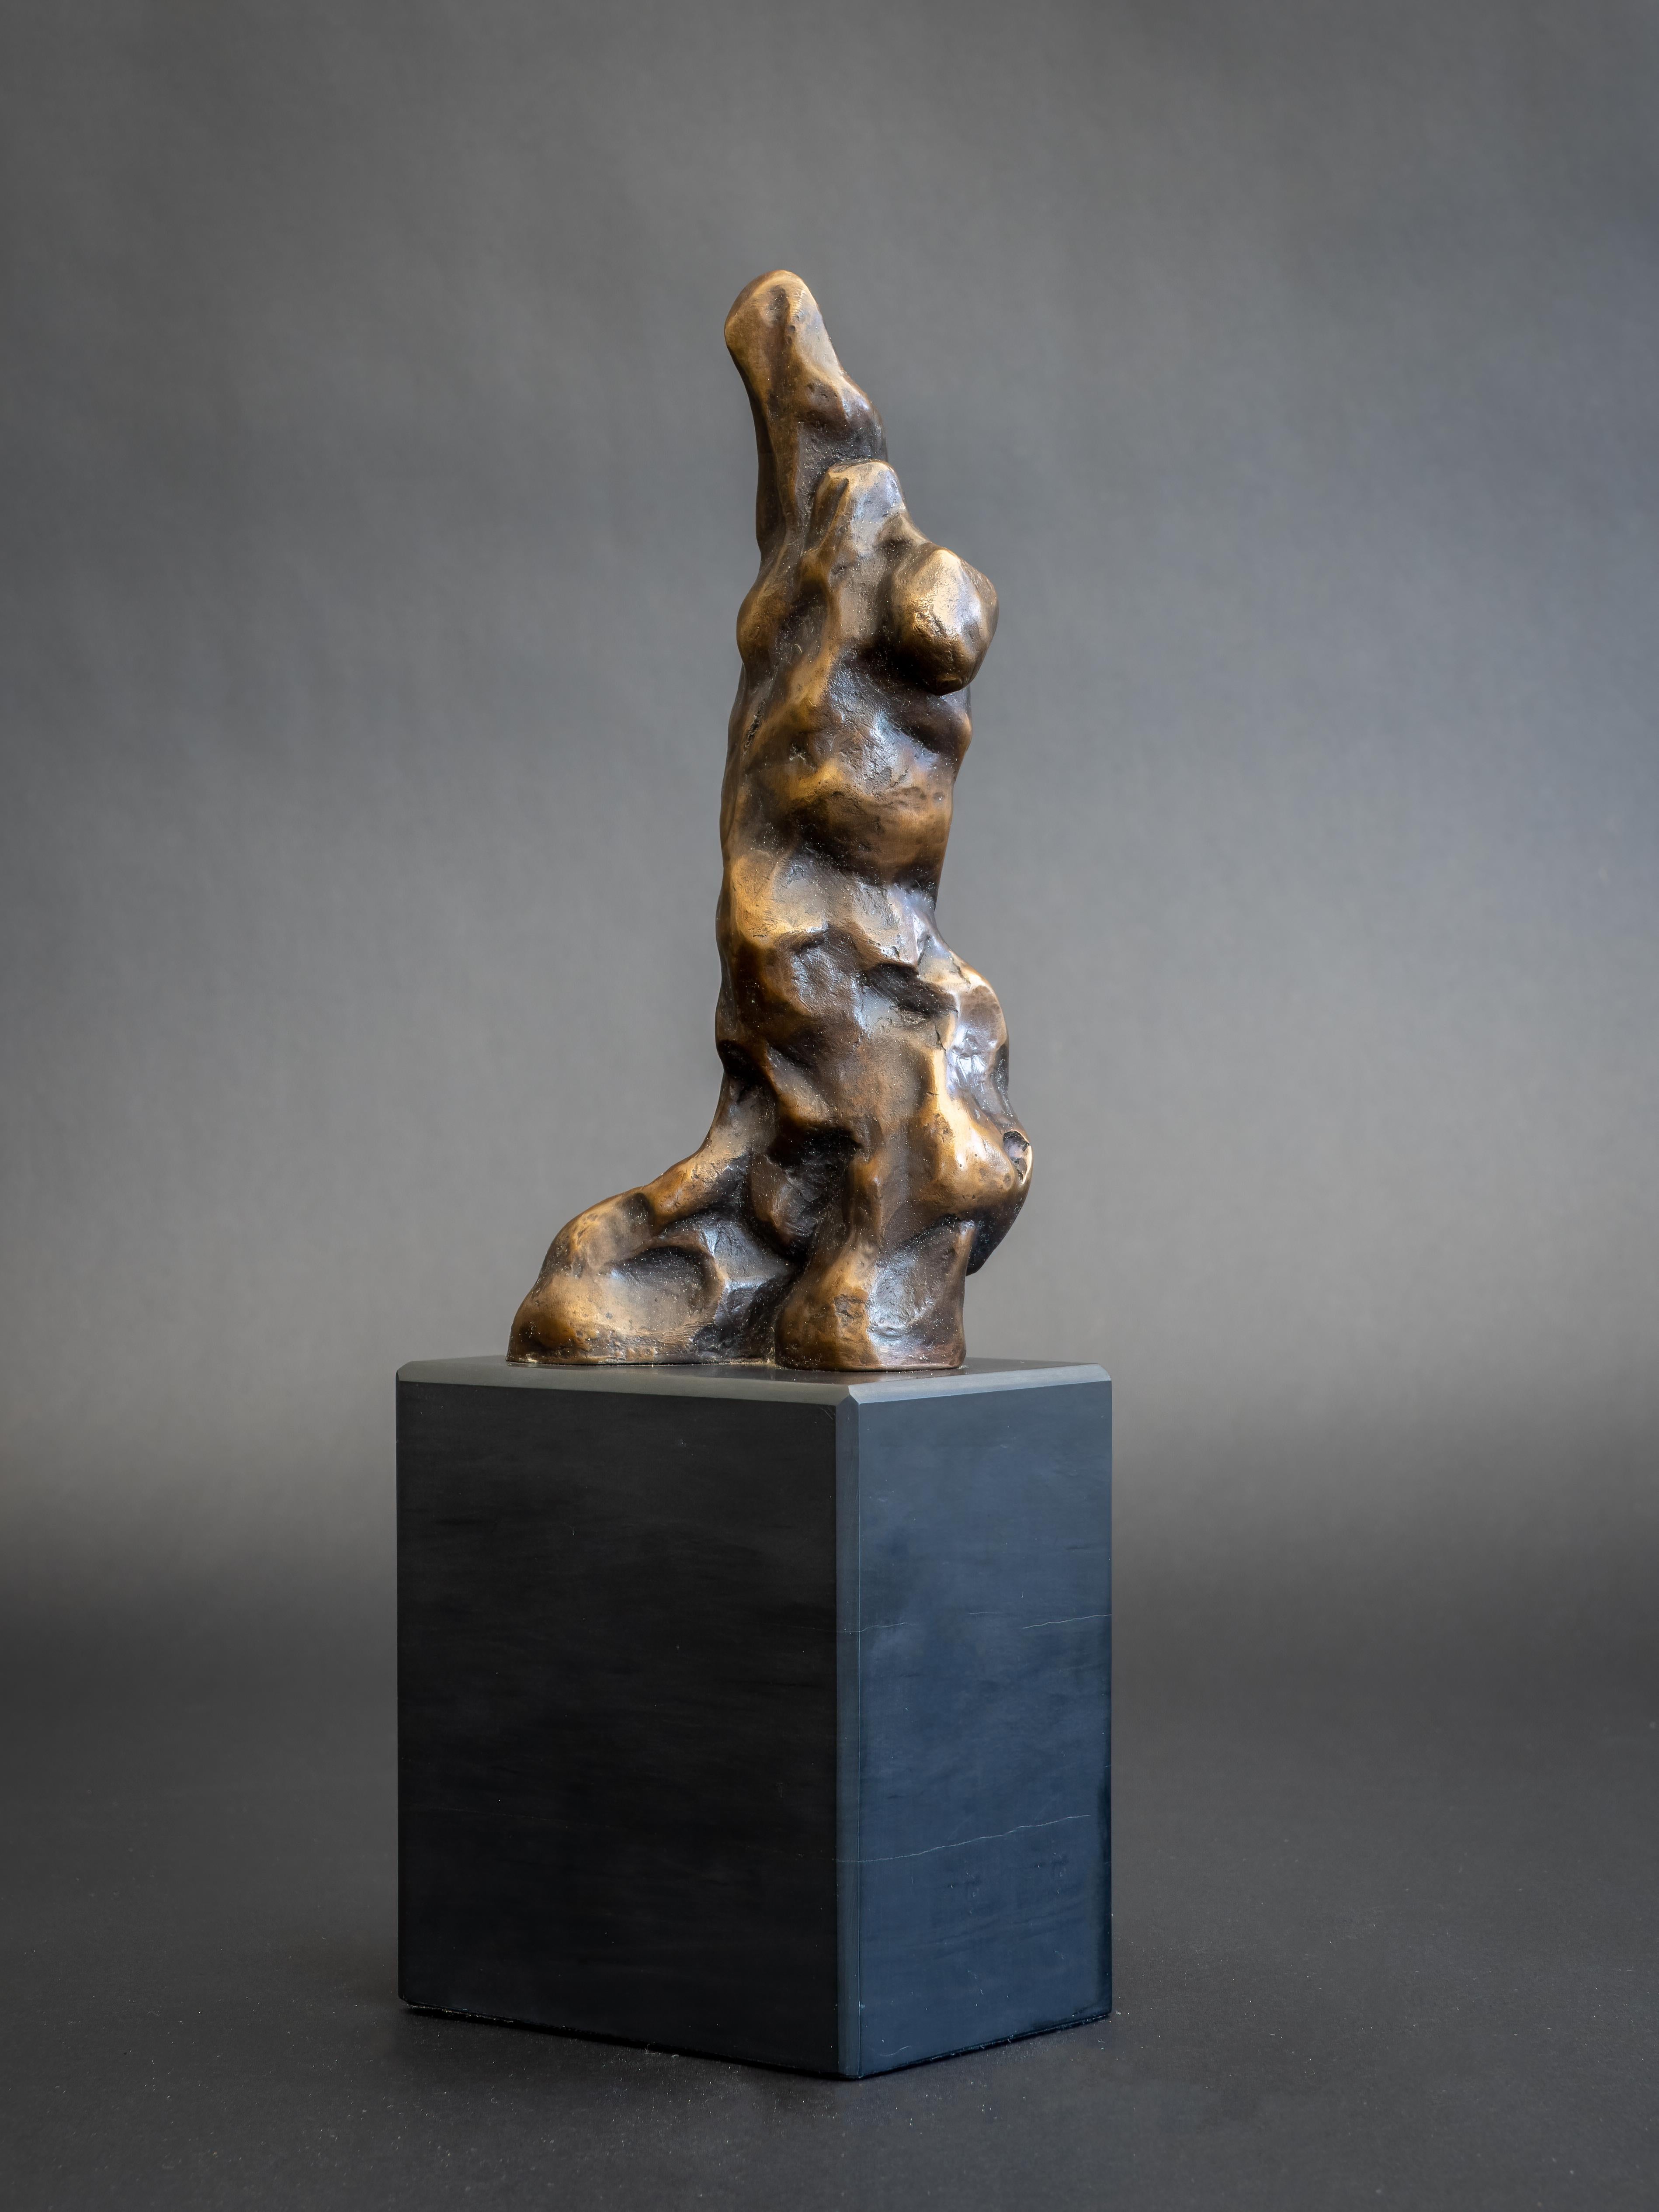 Adam II-original figurative bronze sculptures-artworks for sale-contemporary Art - Contemporary Sculpture by Nicola Godden